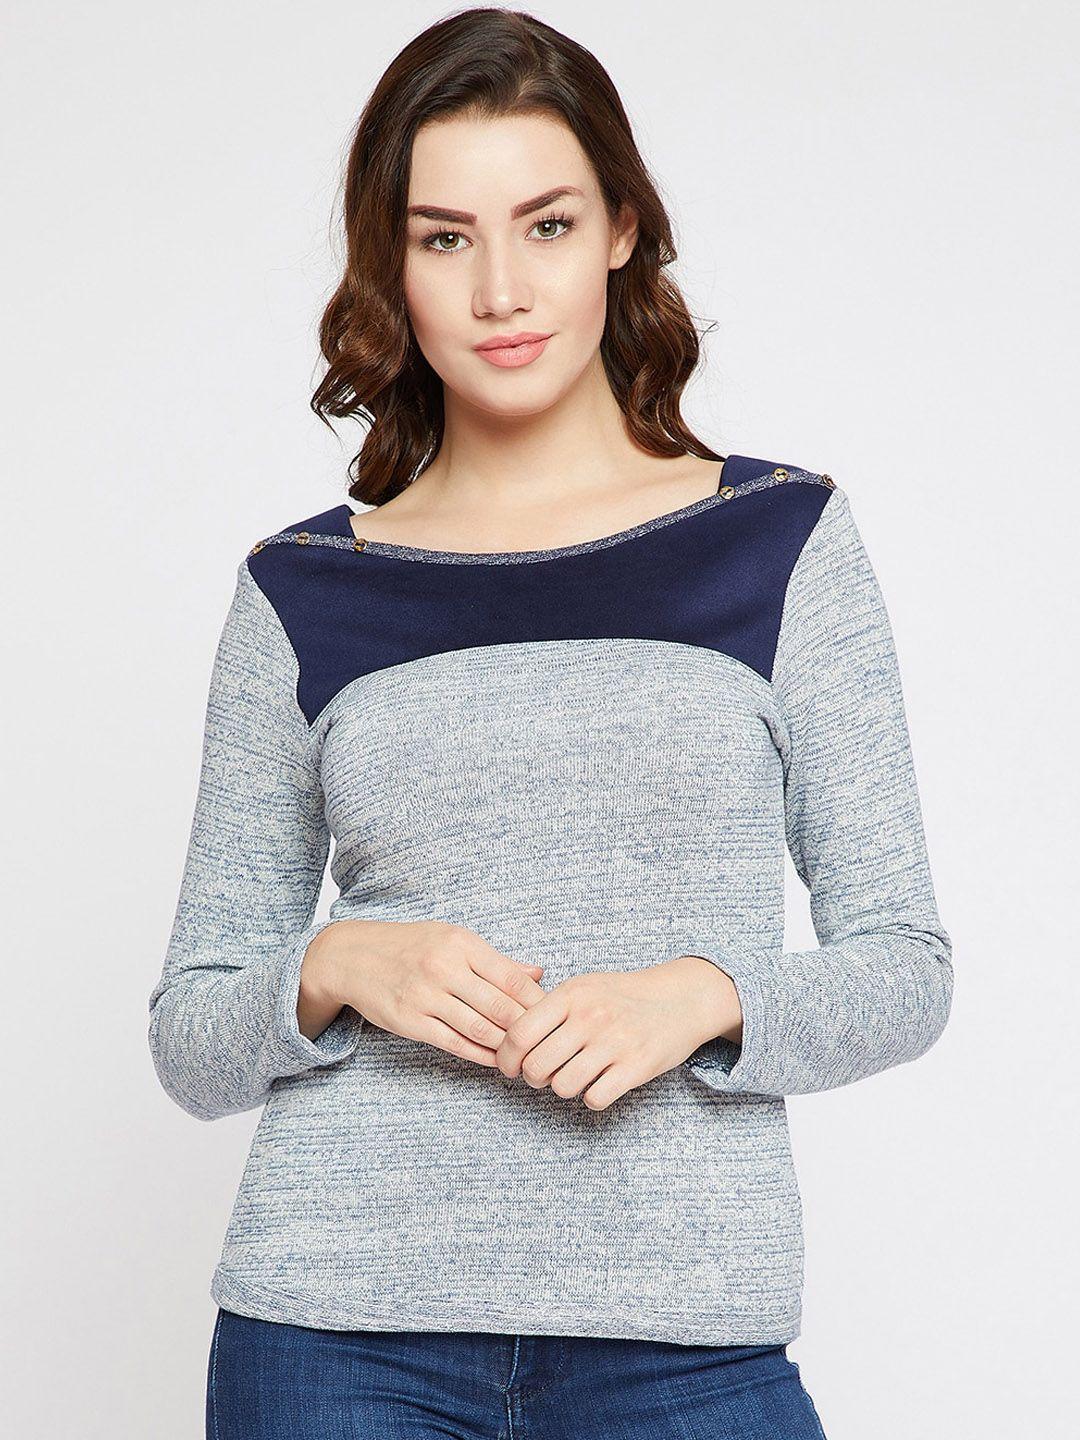 carlton london women navy blue solid pullover sweater